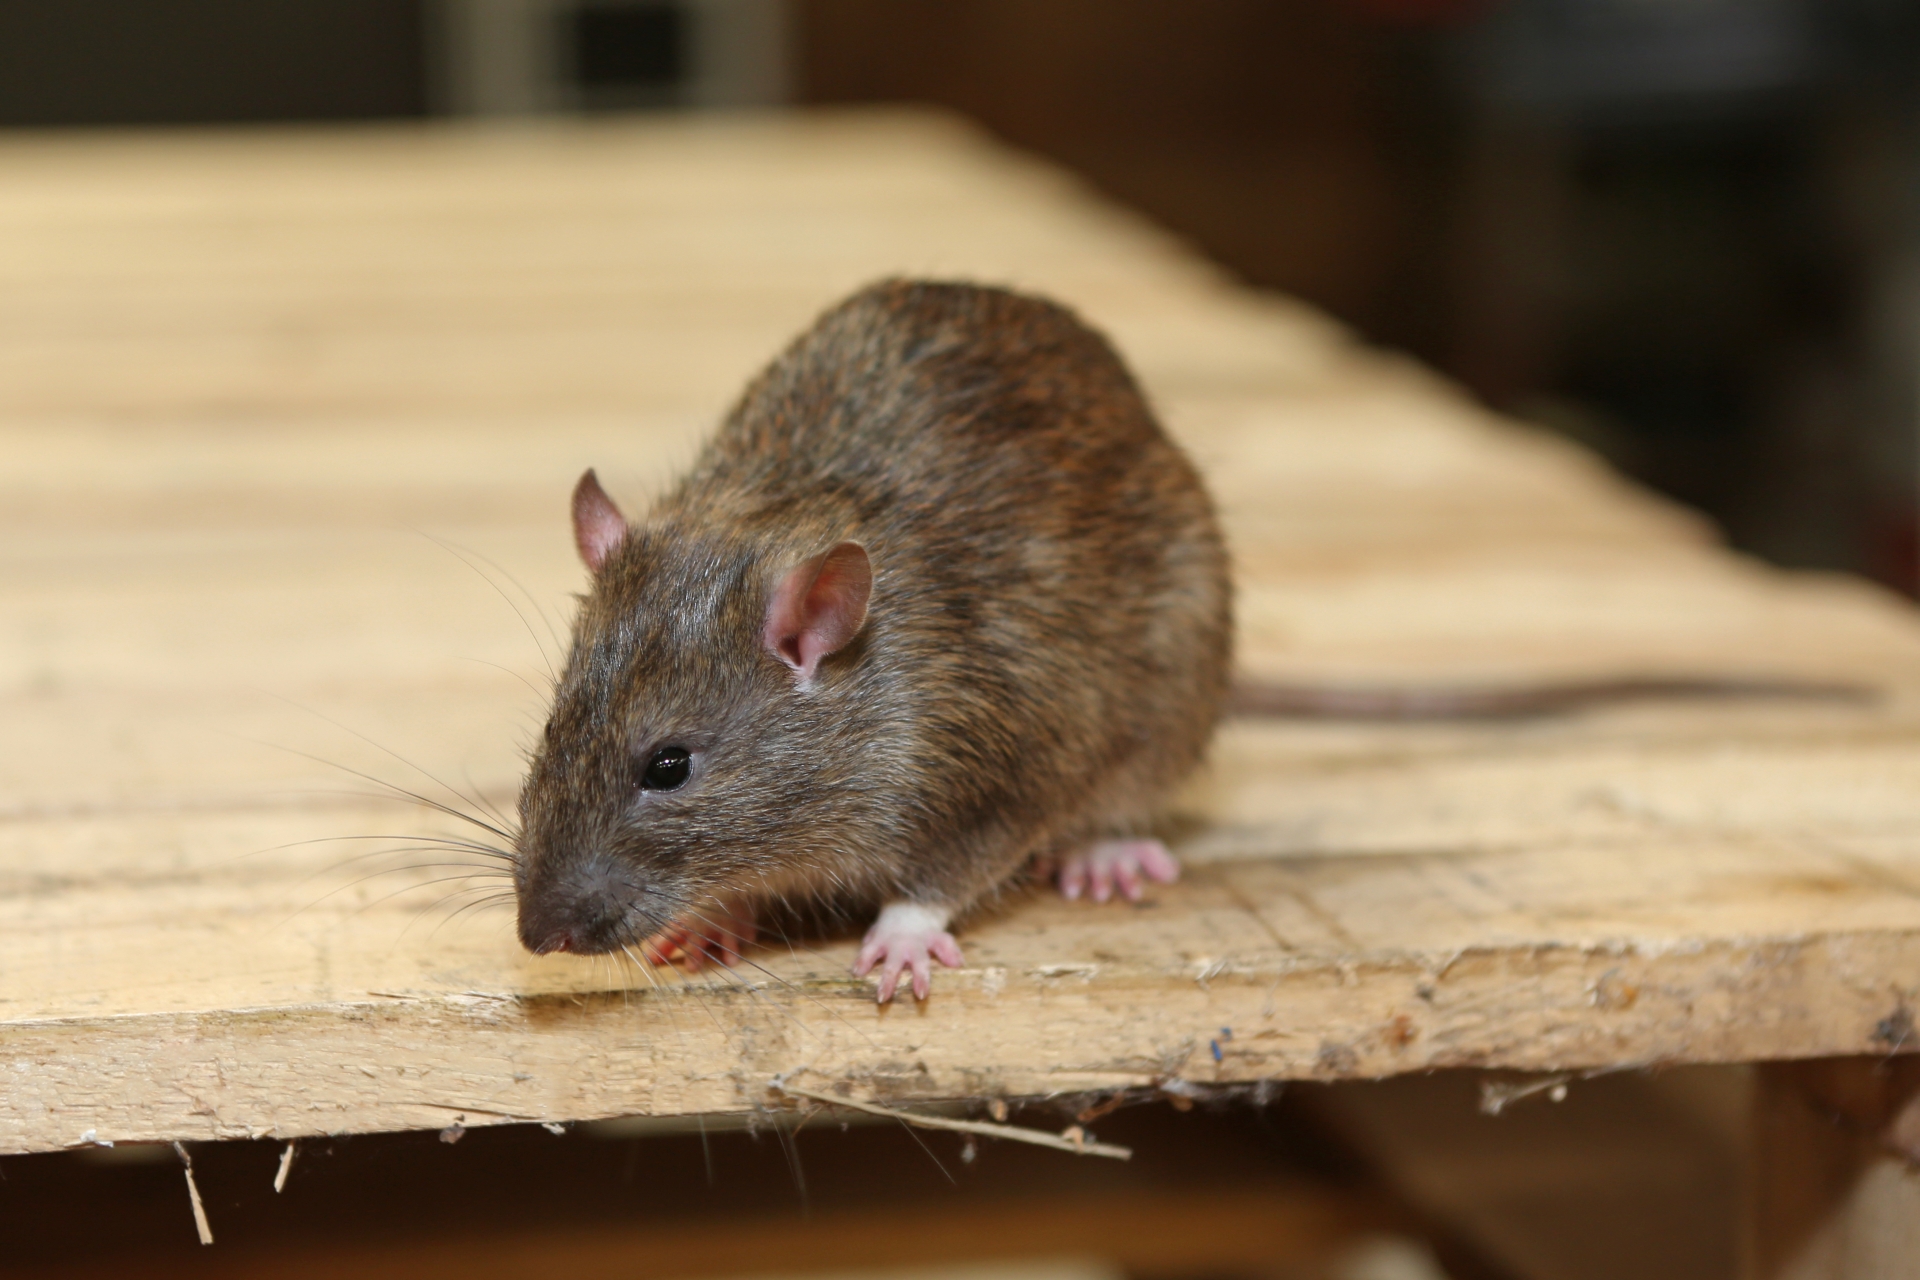 Rat Infestation, Pest Control in Edgware, Burnt Oak, HA8. Call Now 020 8166 9746